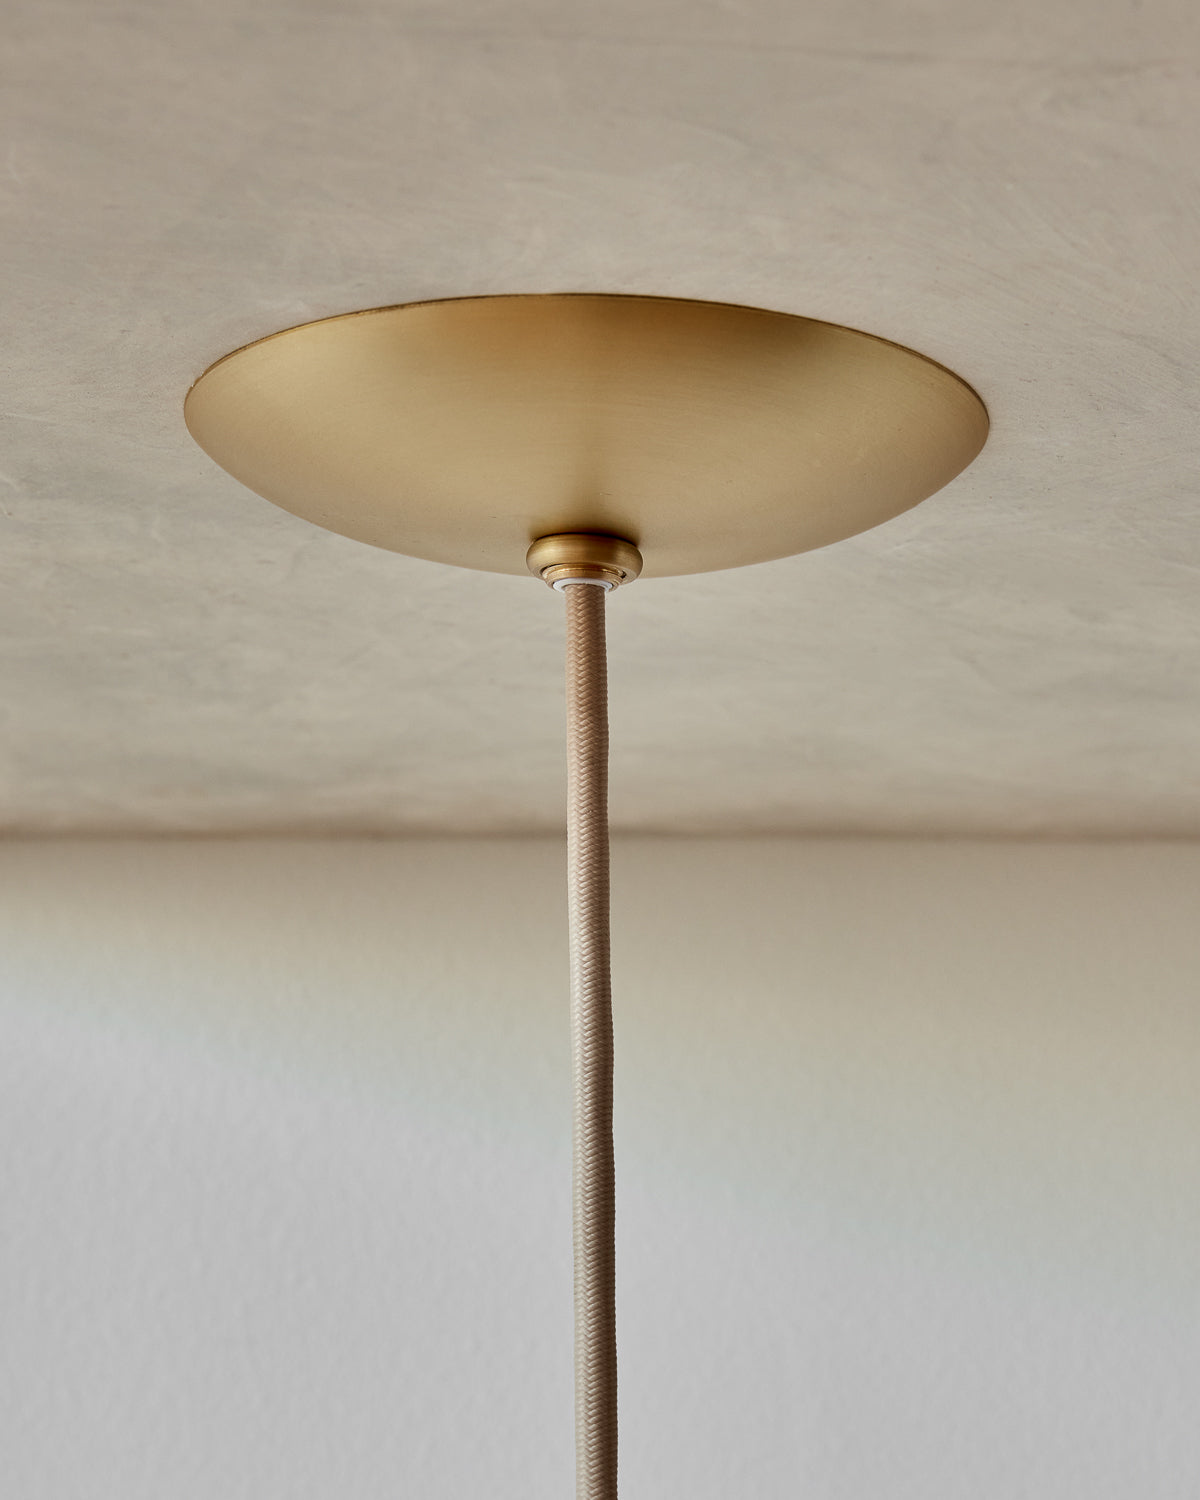 Modern brass globe pendant light with warm satin brass curved body and white milk glass globe